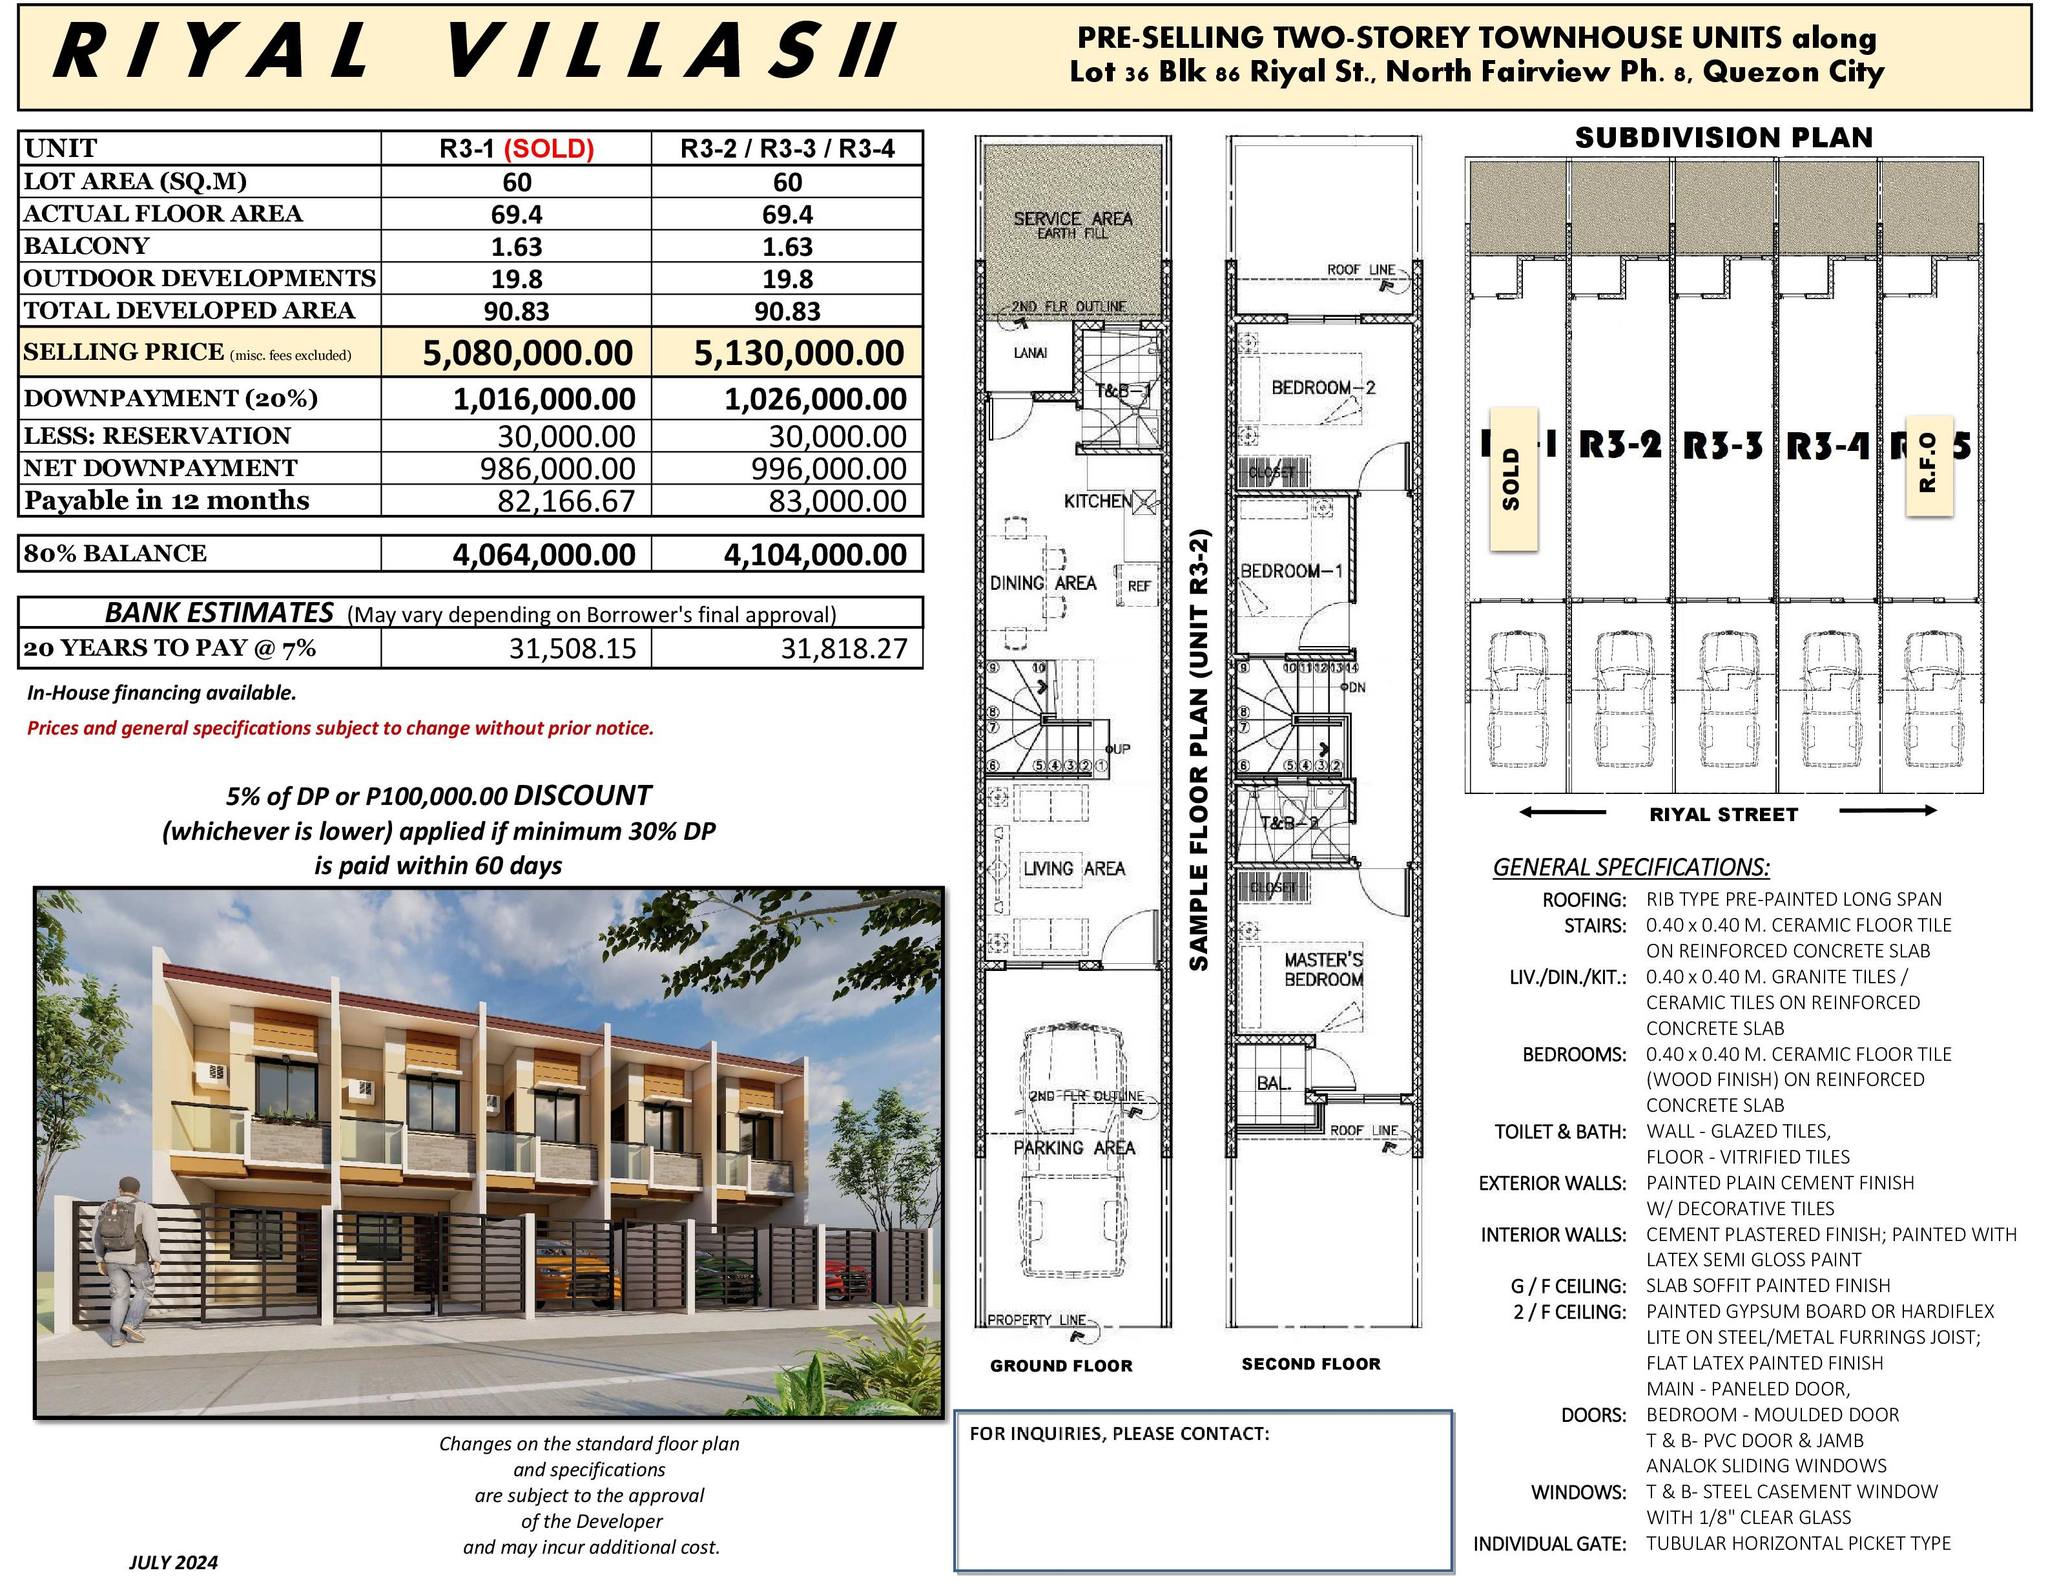 Riyal Villas II, North Fairview Phase 8